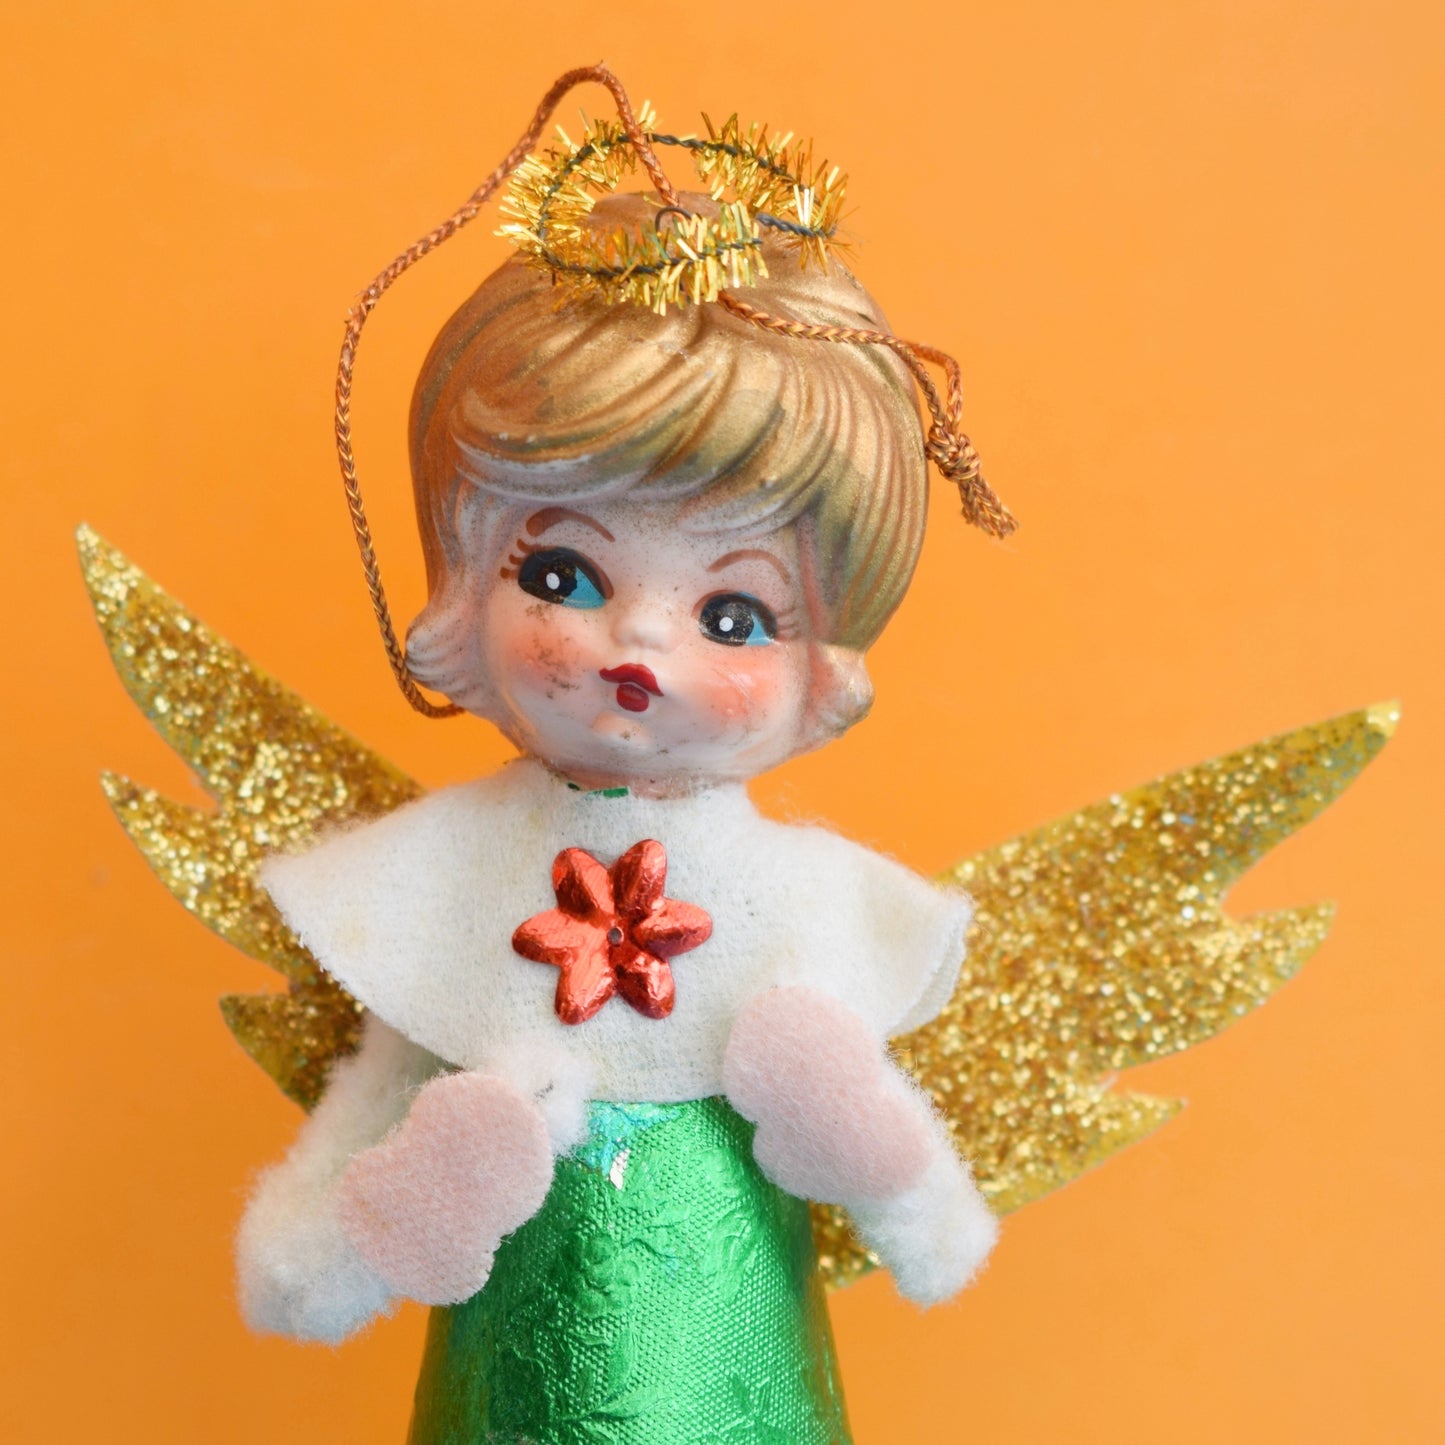 Vintage 1970s Kitsch Angel / Fairy Figure - Green Dress